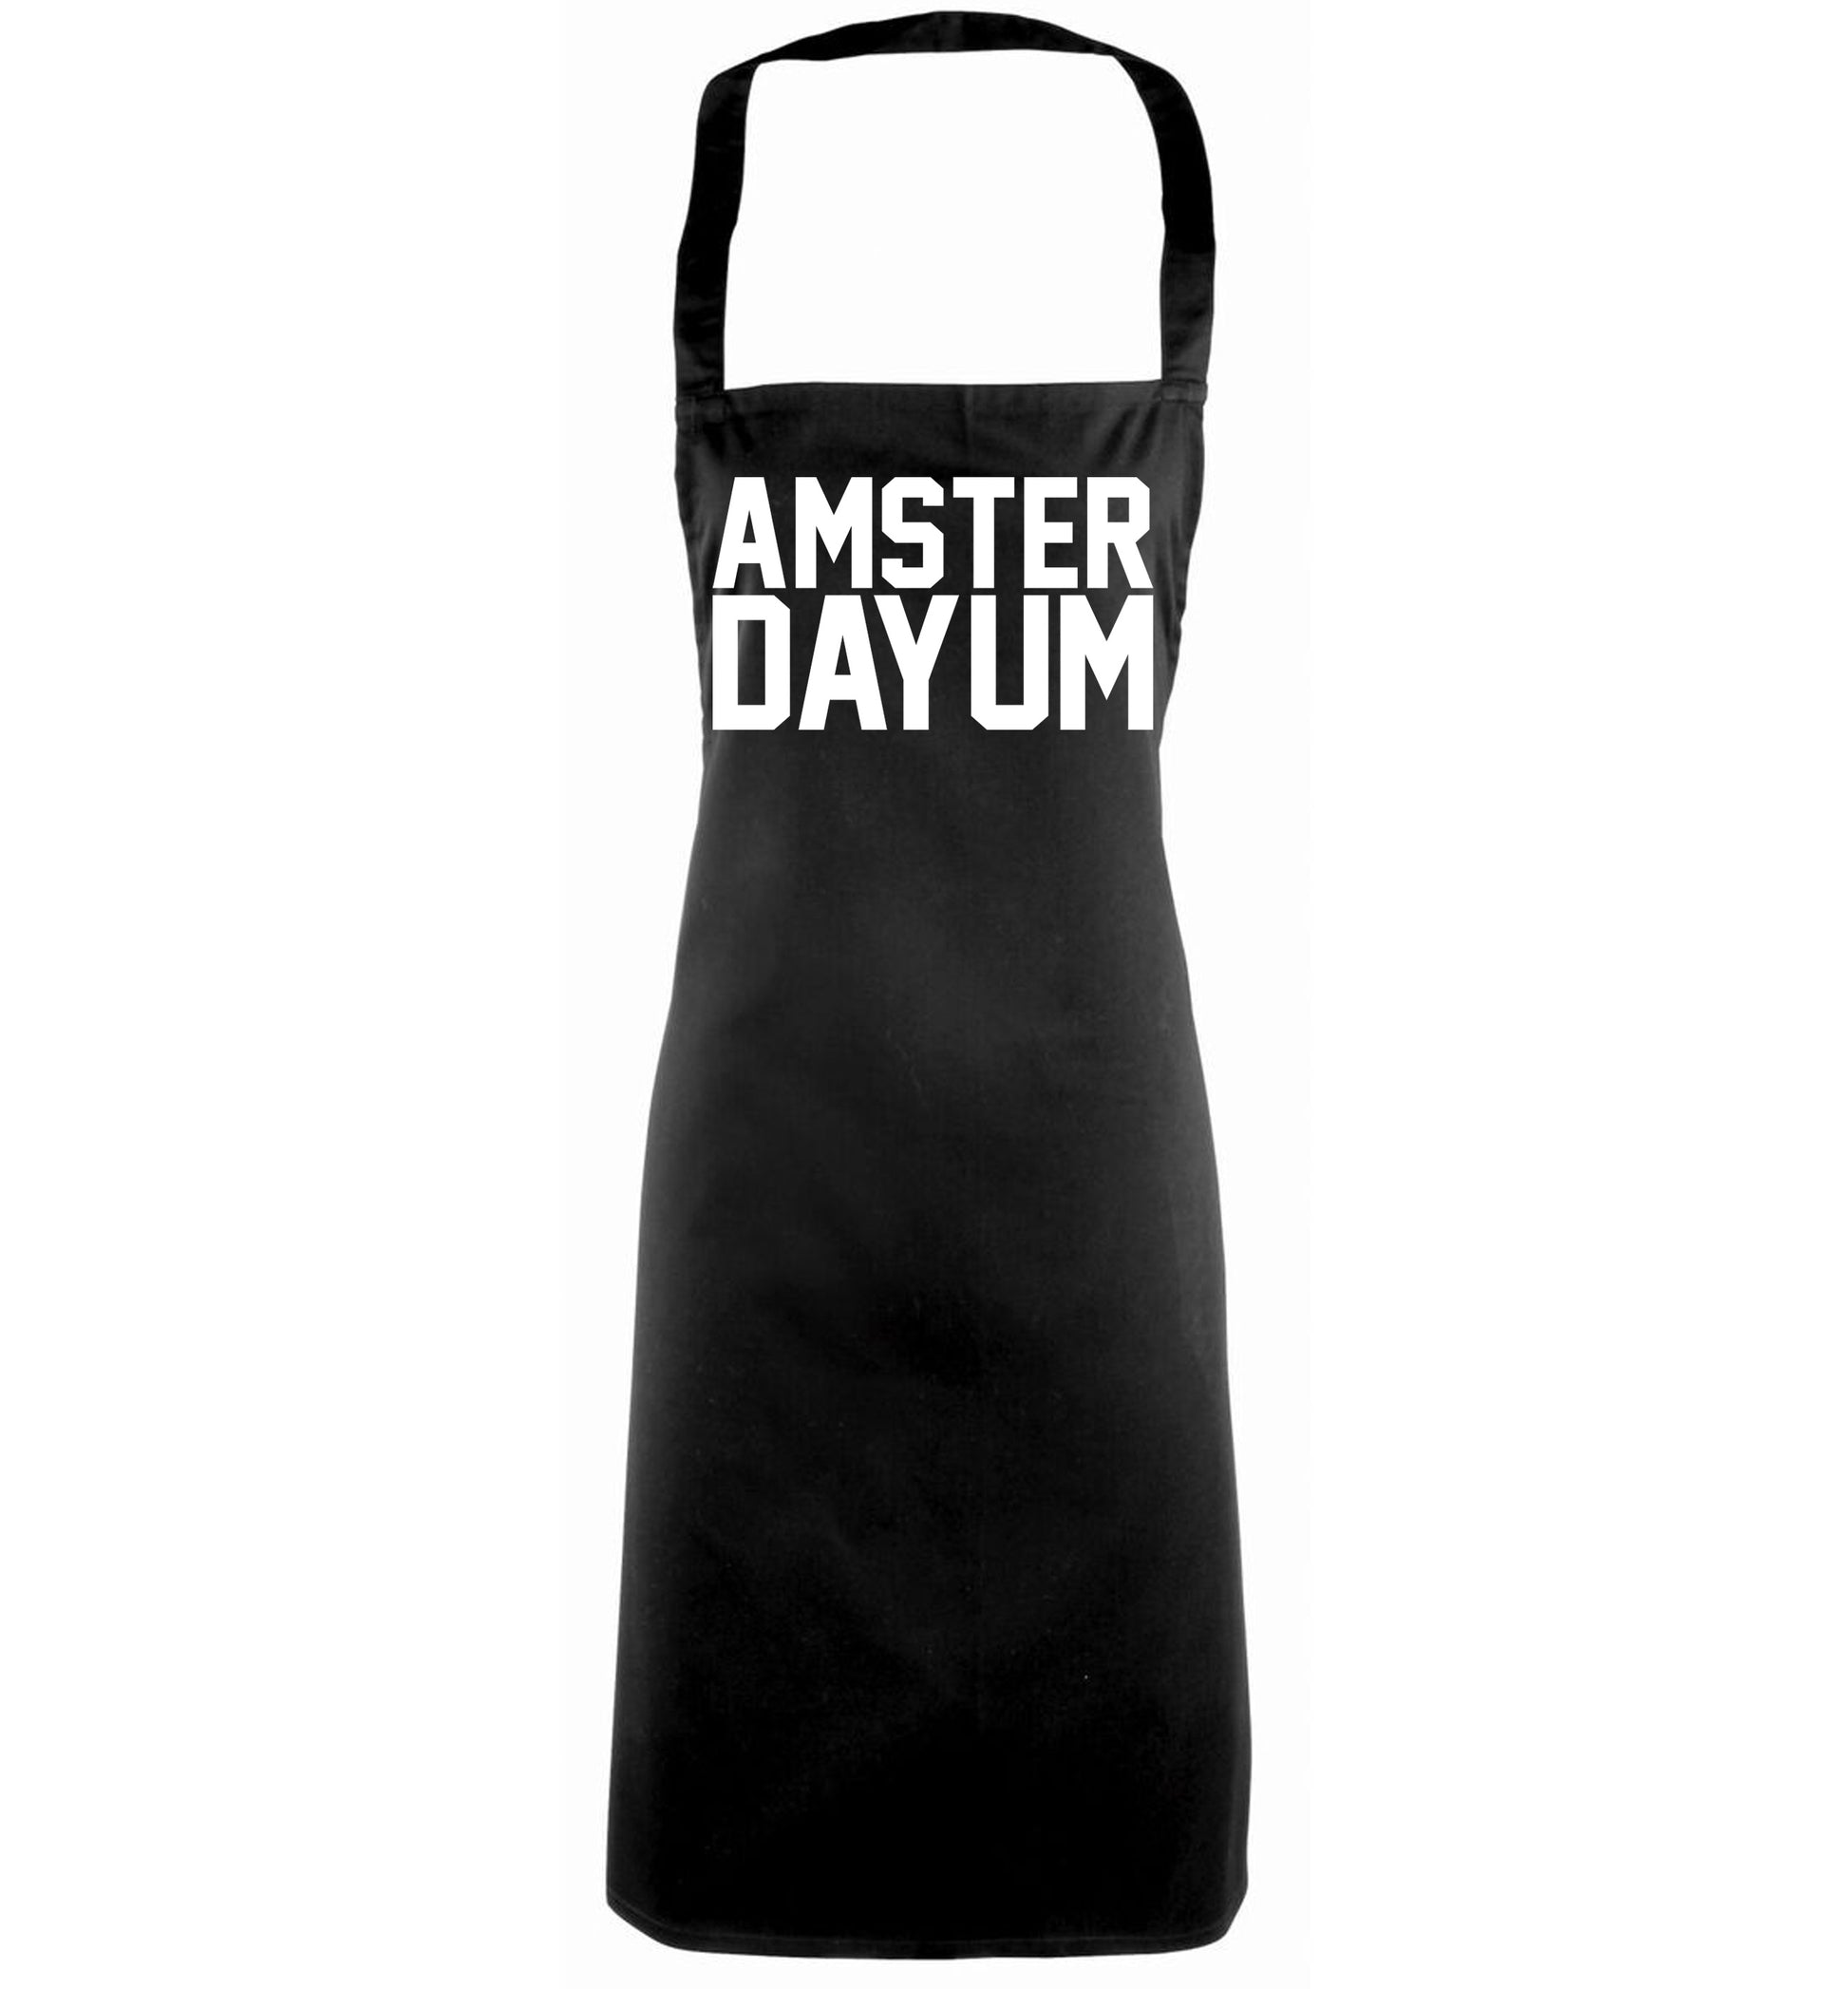 Amsterdayum black apron